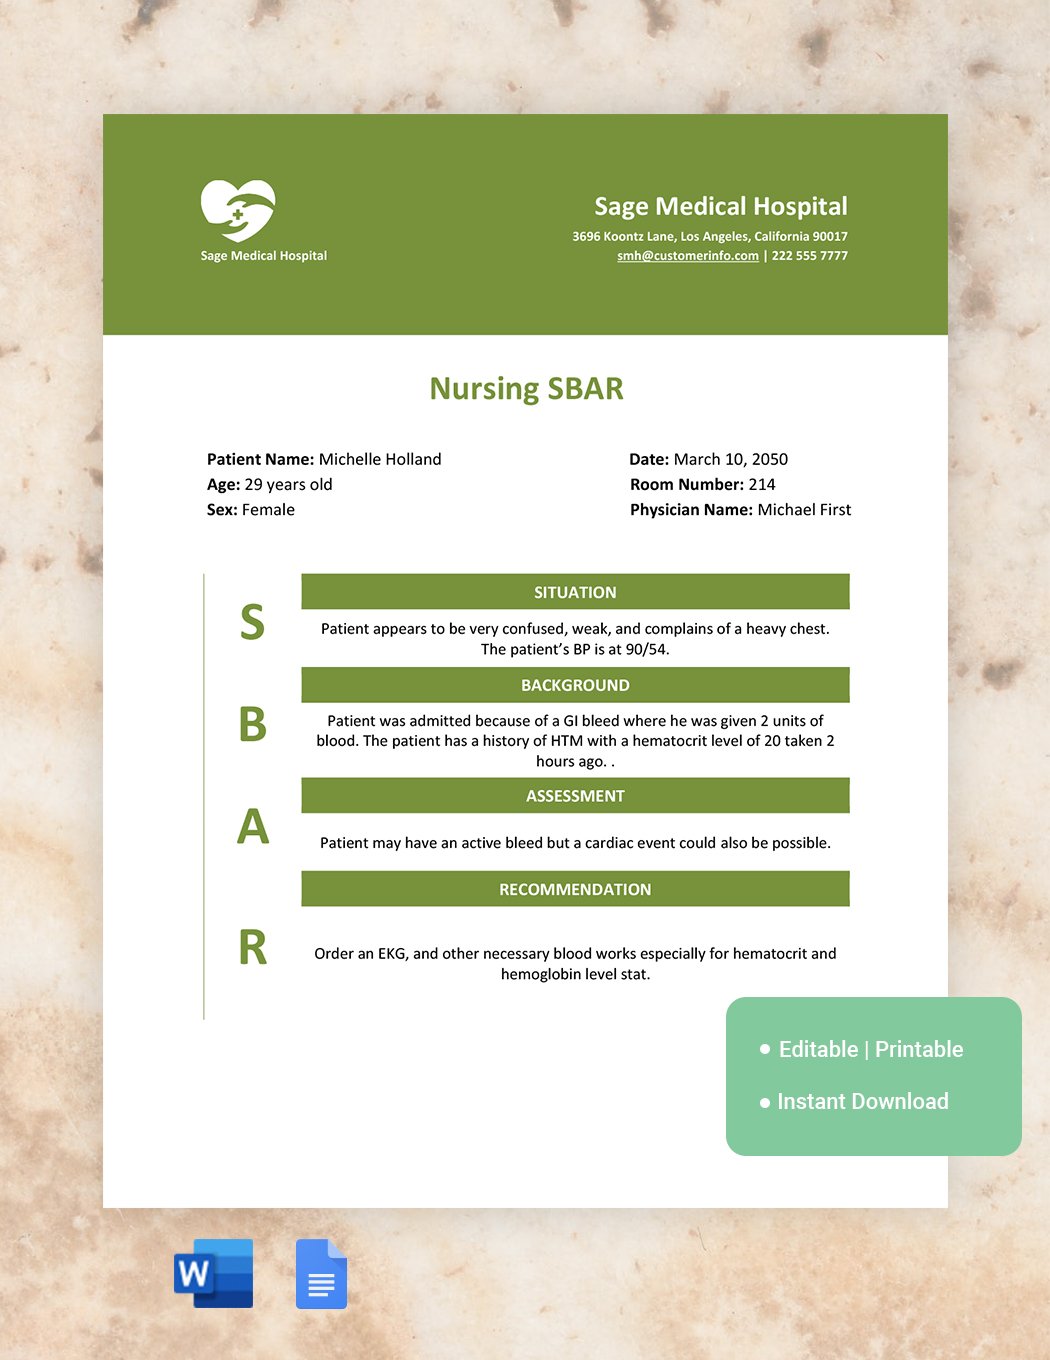 Nursing SBAR Template in Word, Google Docs